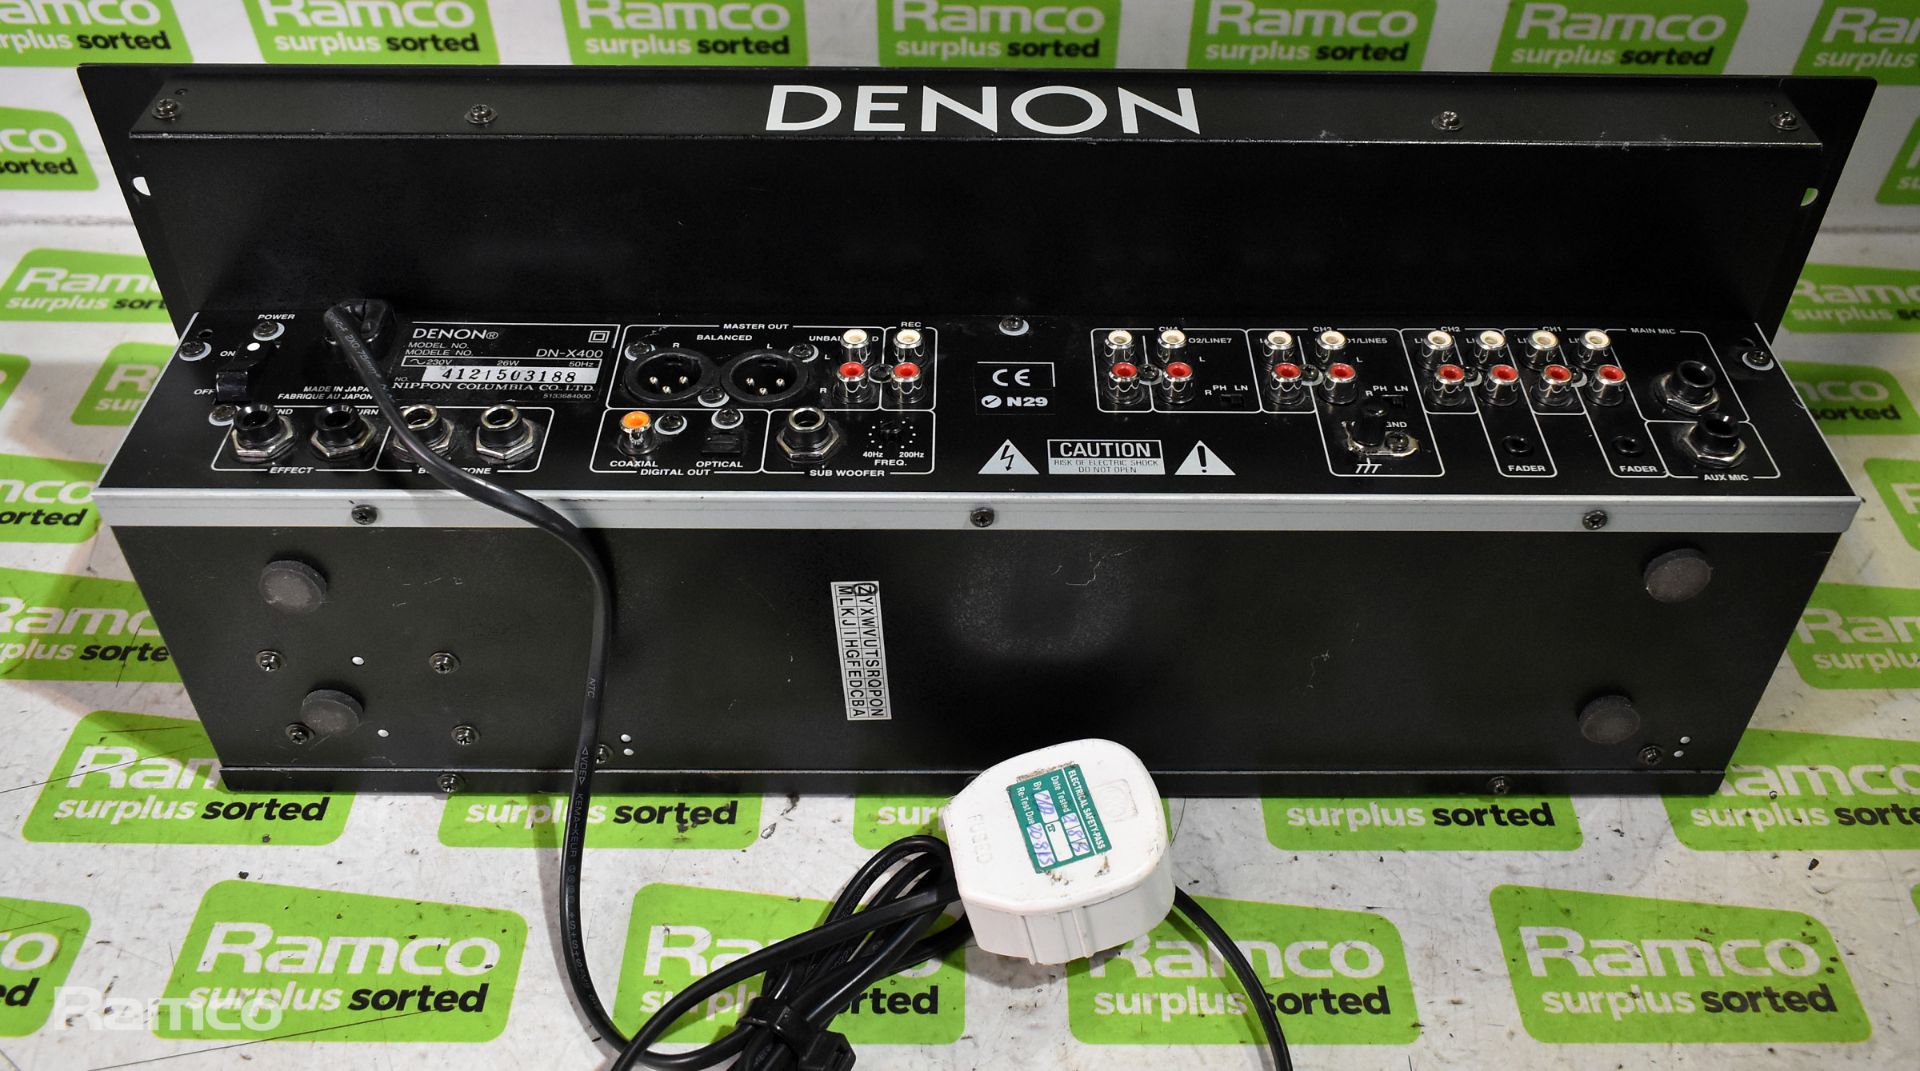 360 Systems SC-182 Shortcut personal audio editor, Denon DN-X400 4 channel DJ mixer - Image 5 of 19